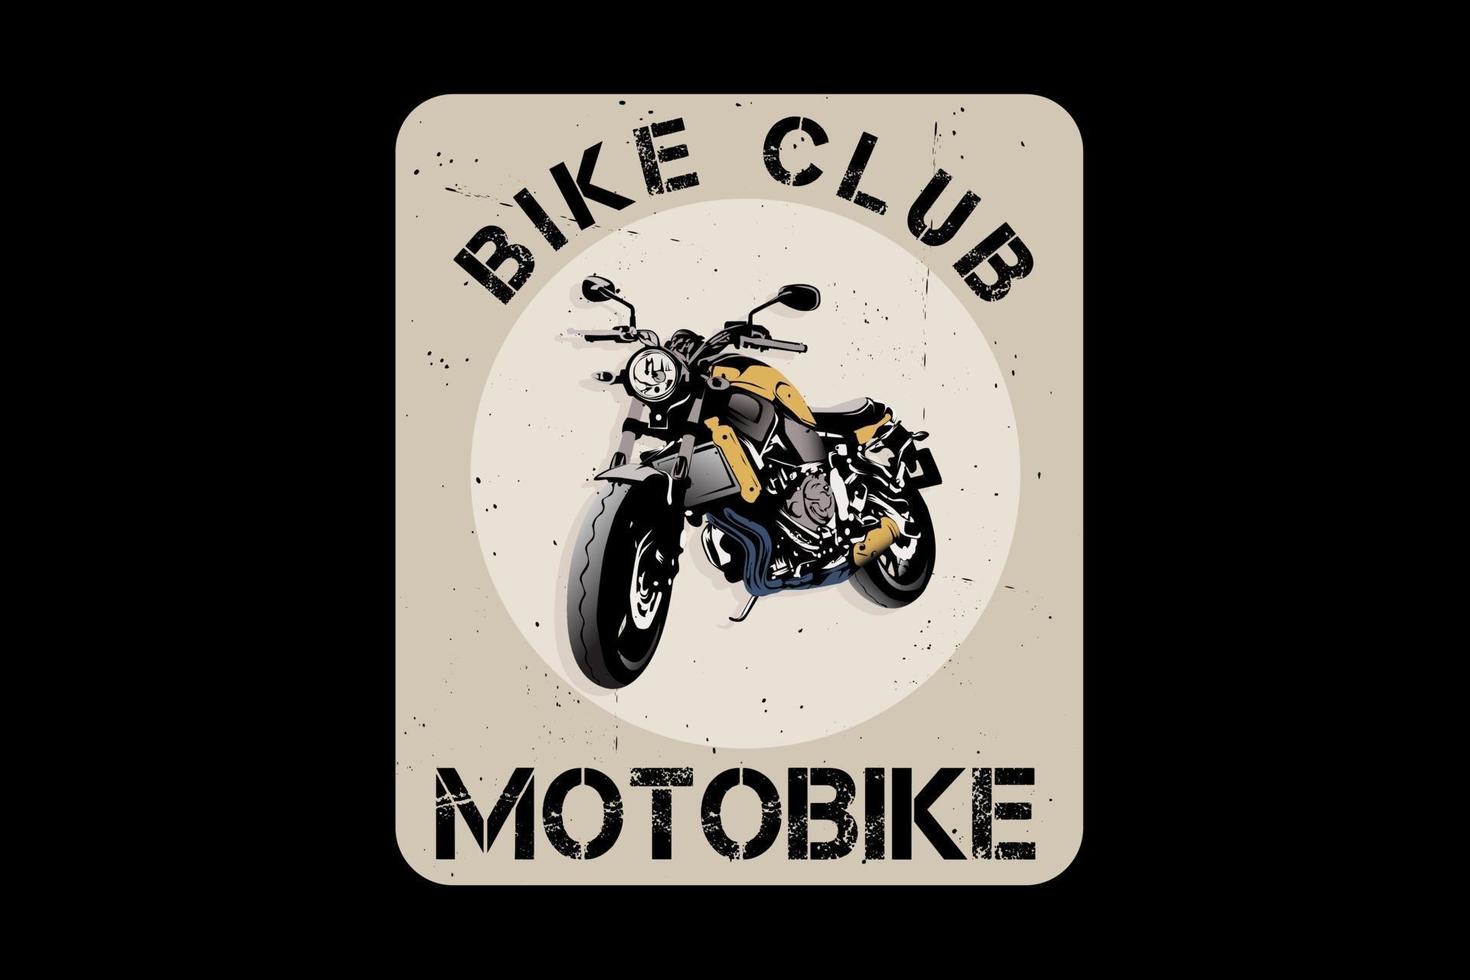 Motorrad-Bike-Club-Silhouette-Design vektor